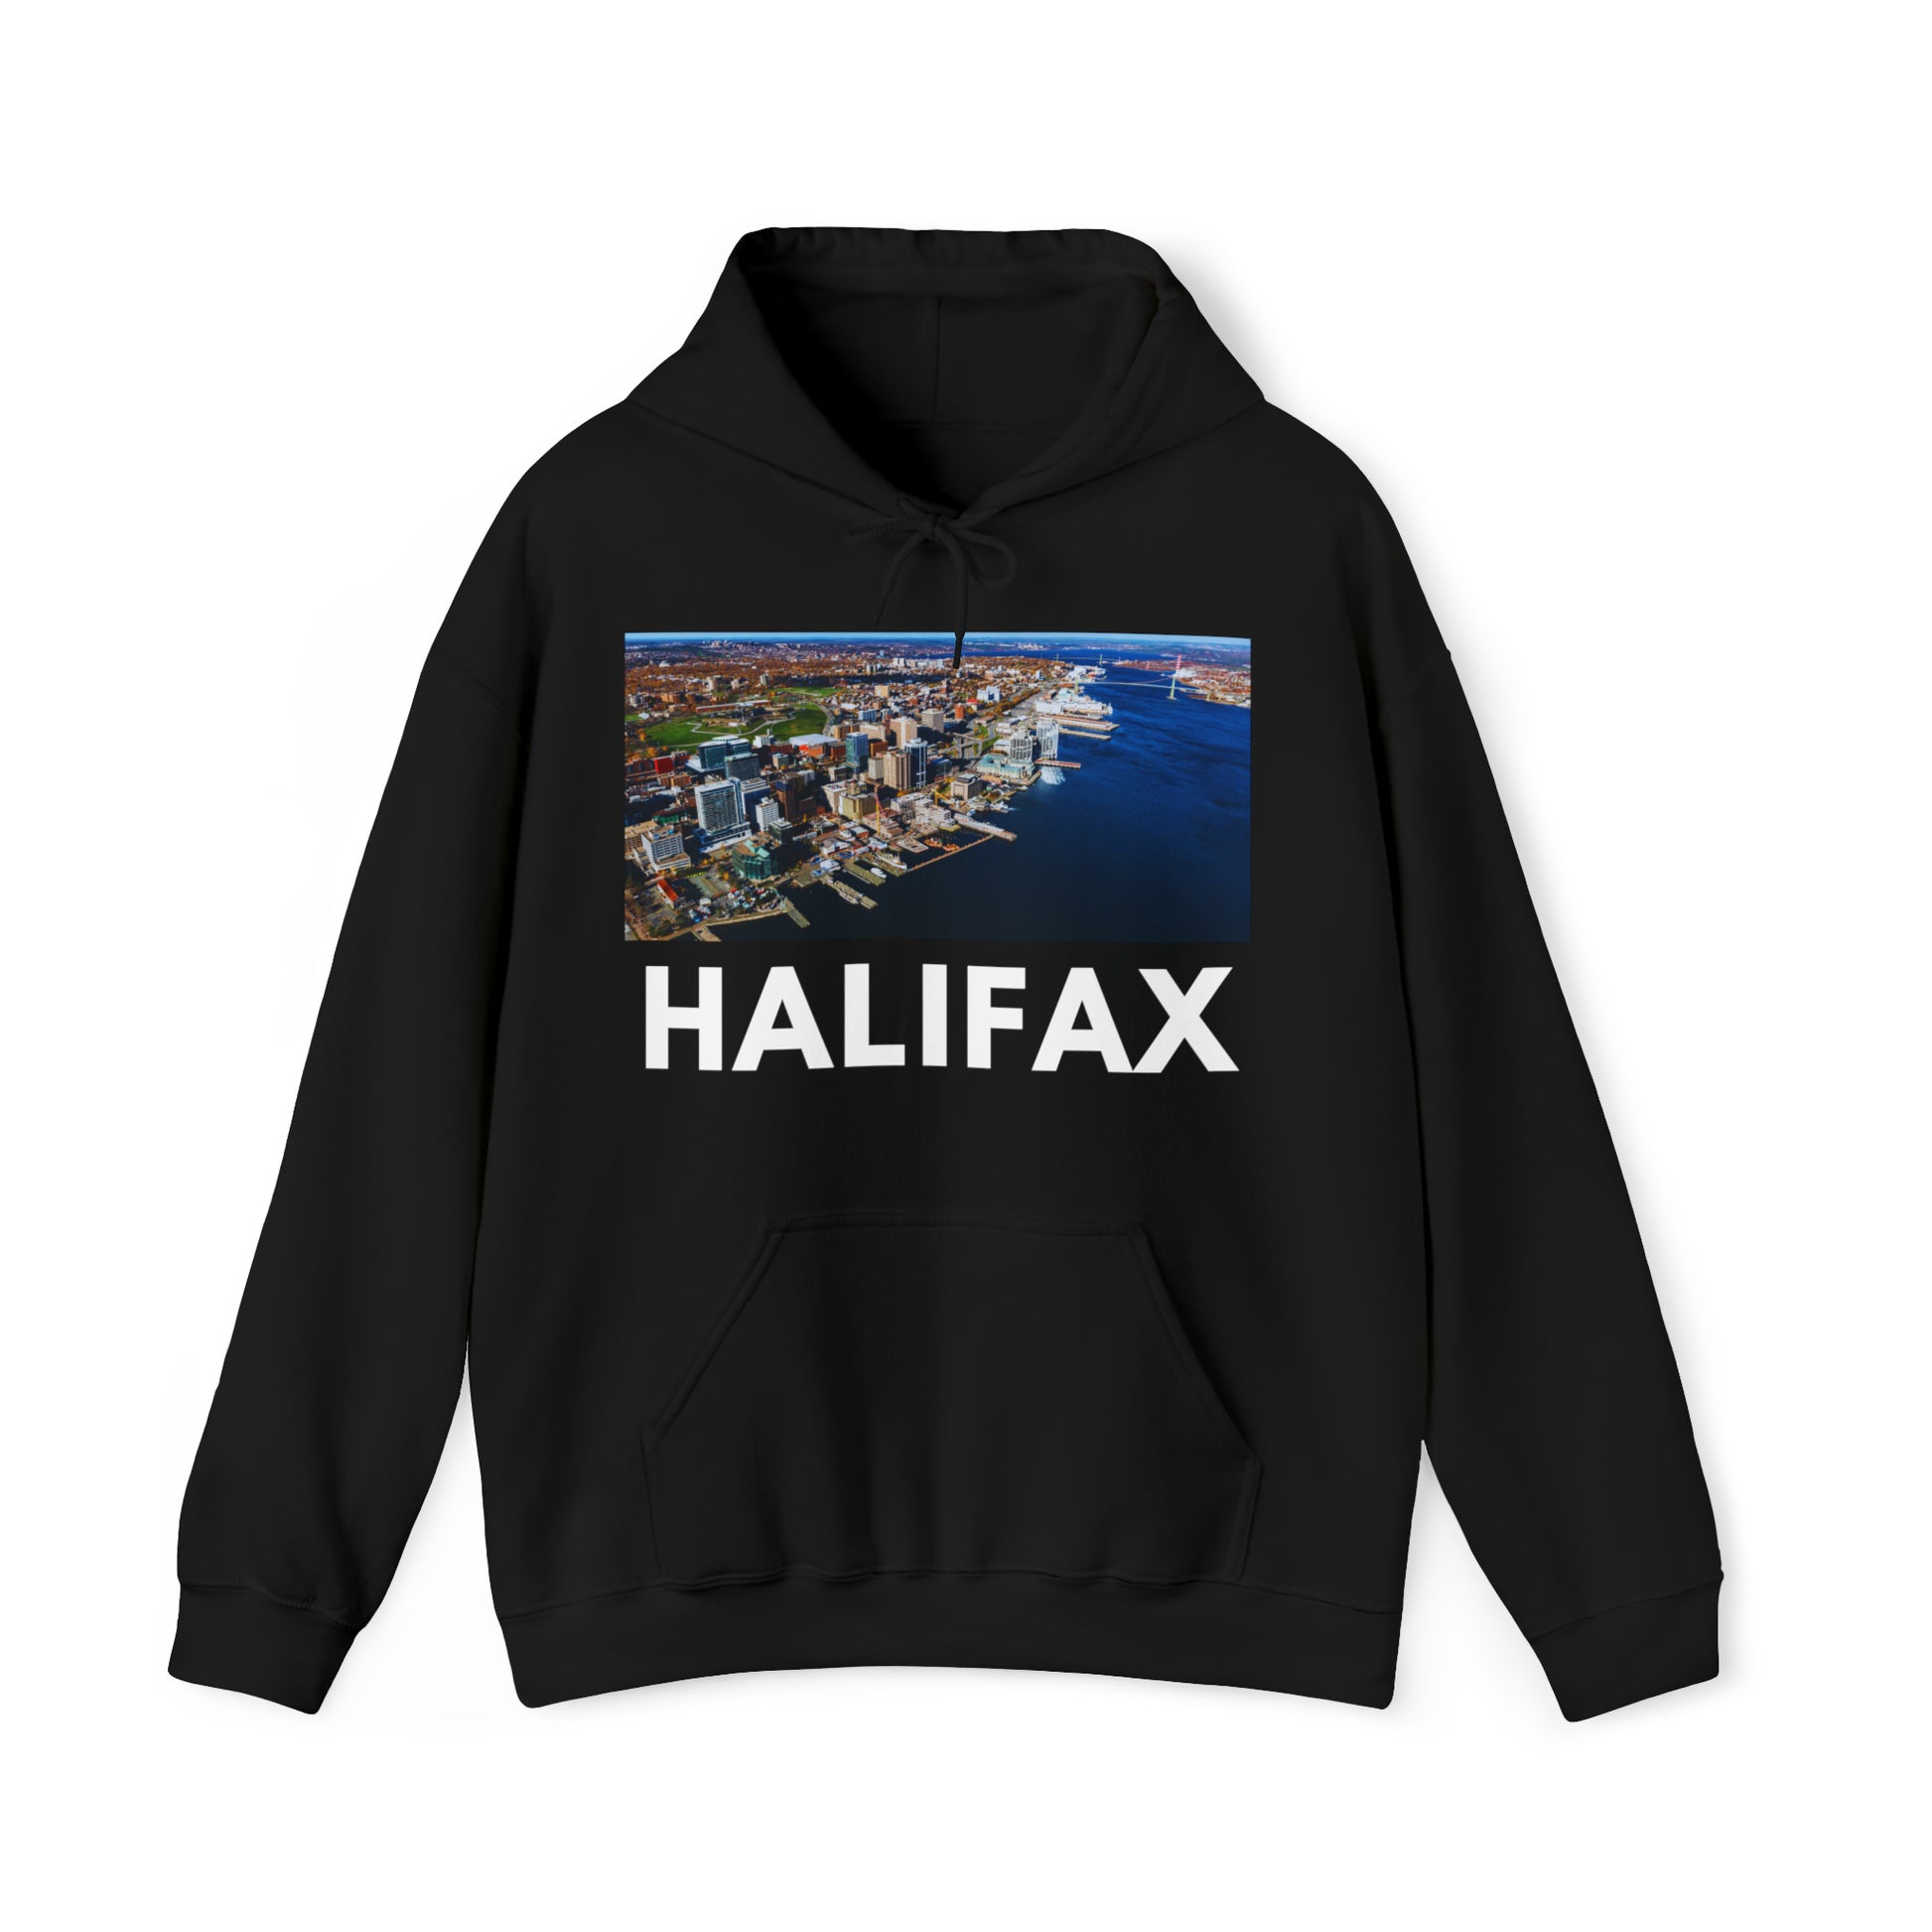 S Black Halifax Hoodie: The Waterfront from HoodySZN.com